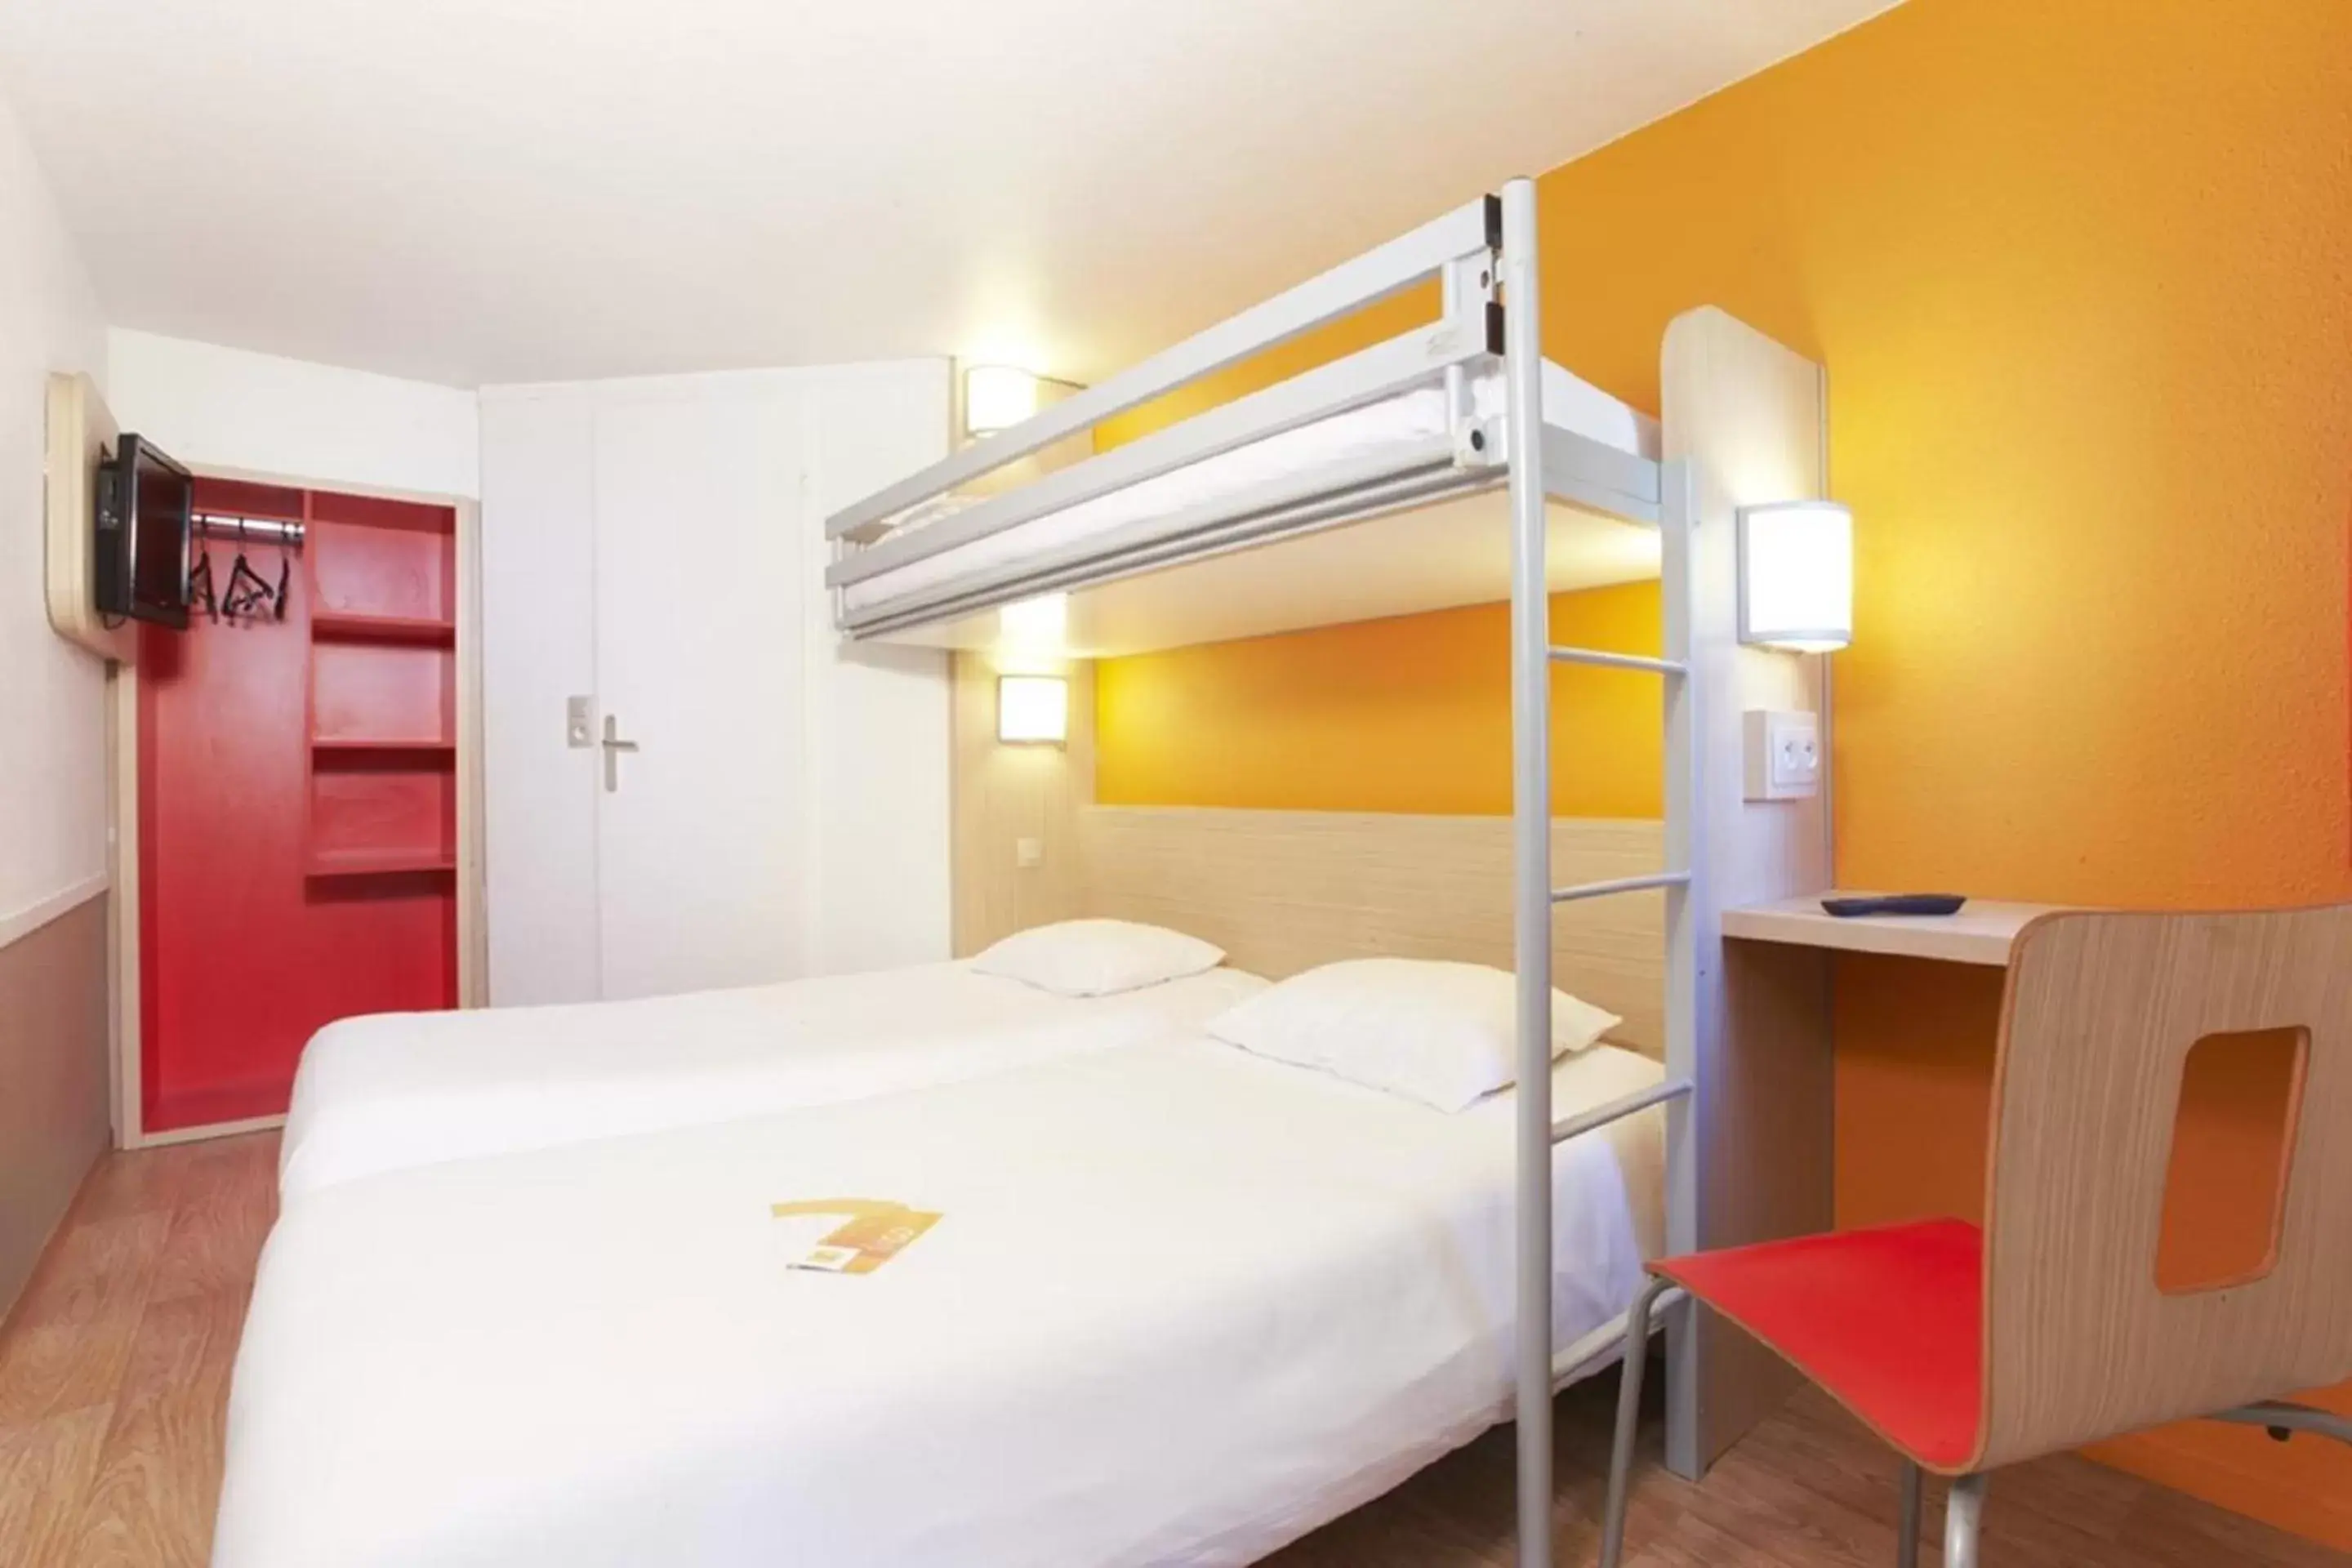 Triple Room (1 Double Bed + 1 Single Bed) in Premiere Classe Lille - Villeneuve d’Ascq - Stade Pierre Mauroy